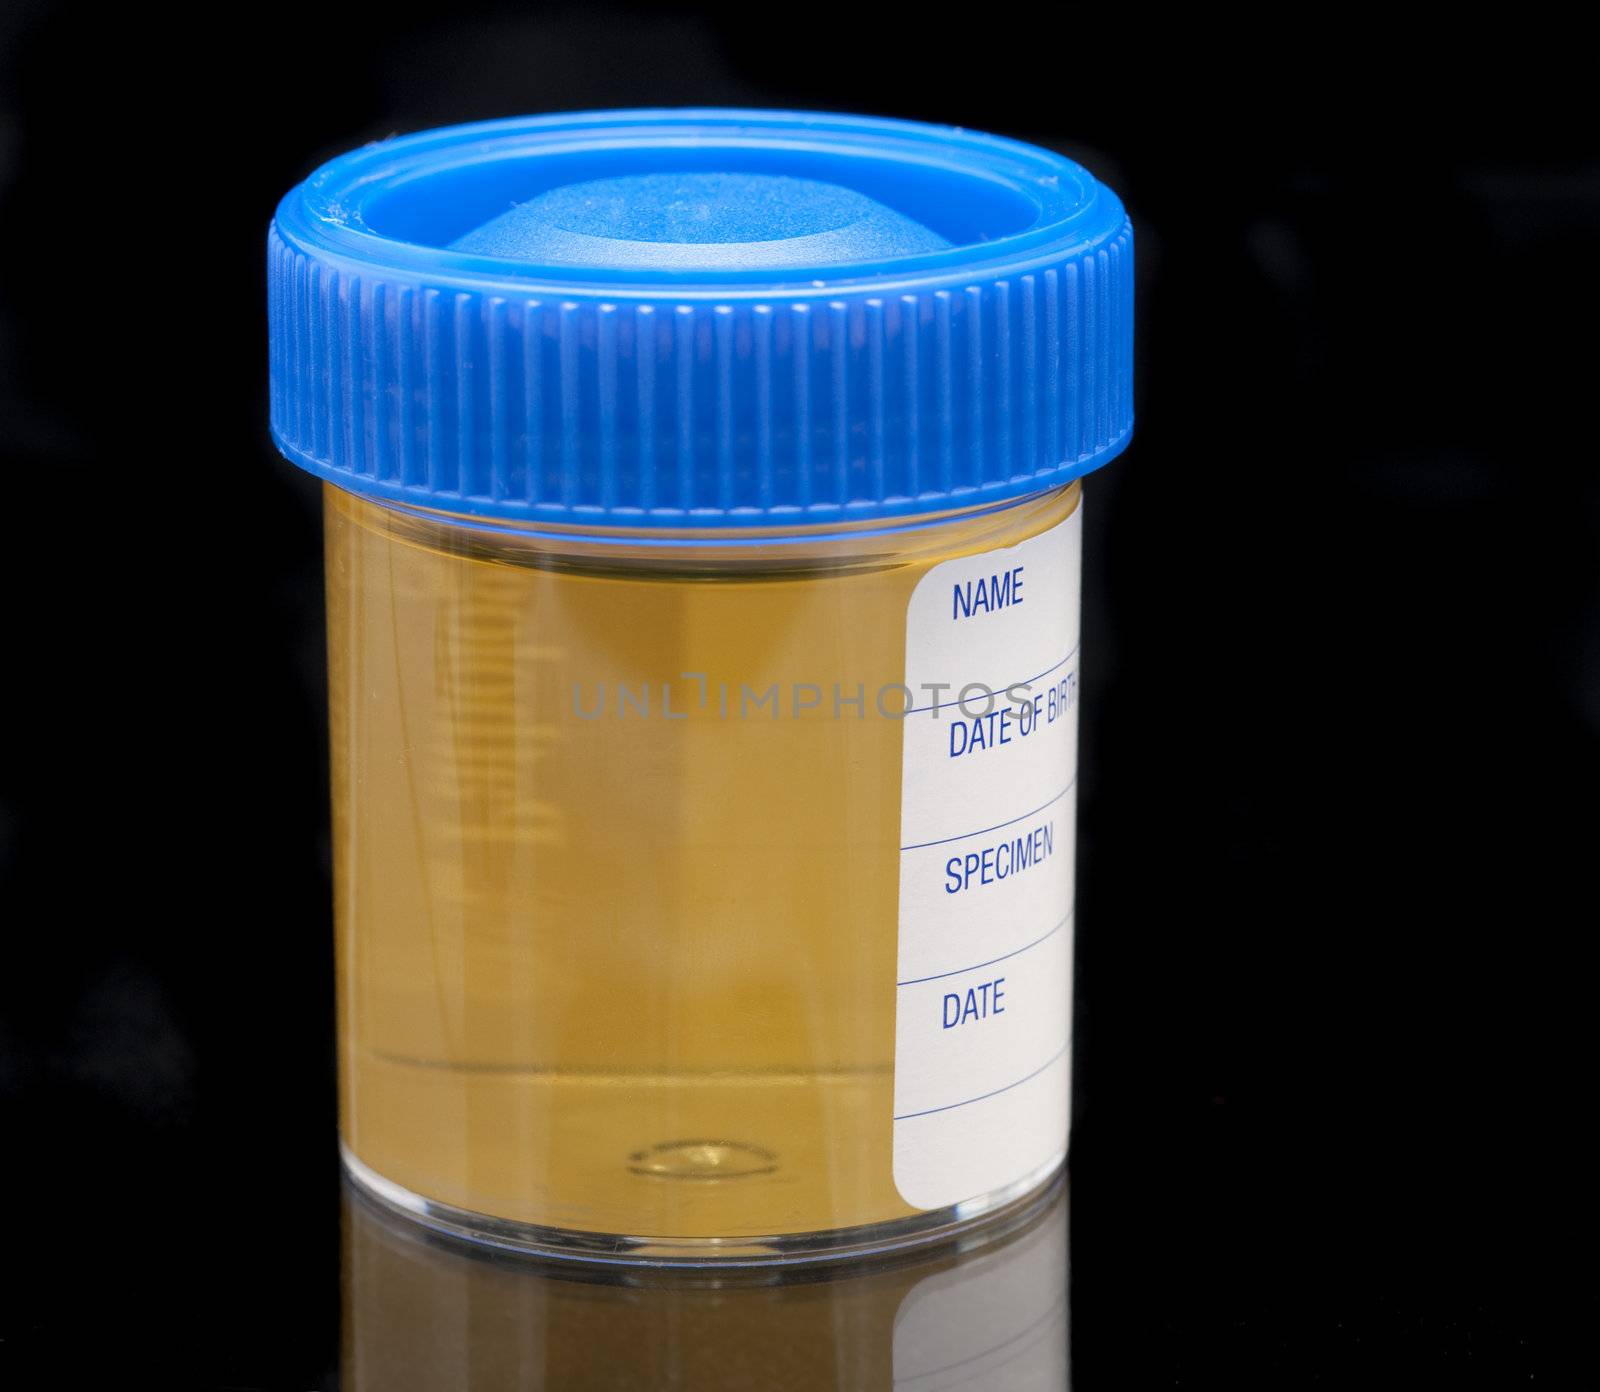 pathology test jar containing a urine sample on a dark background